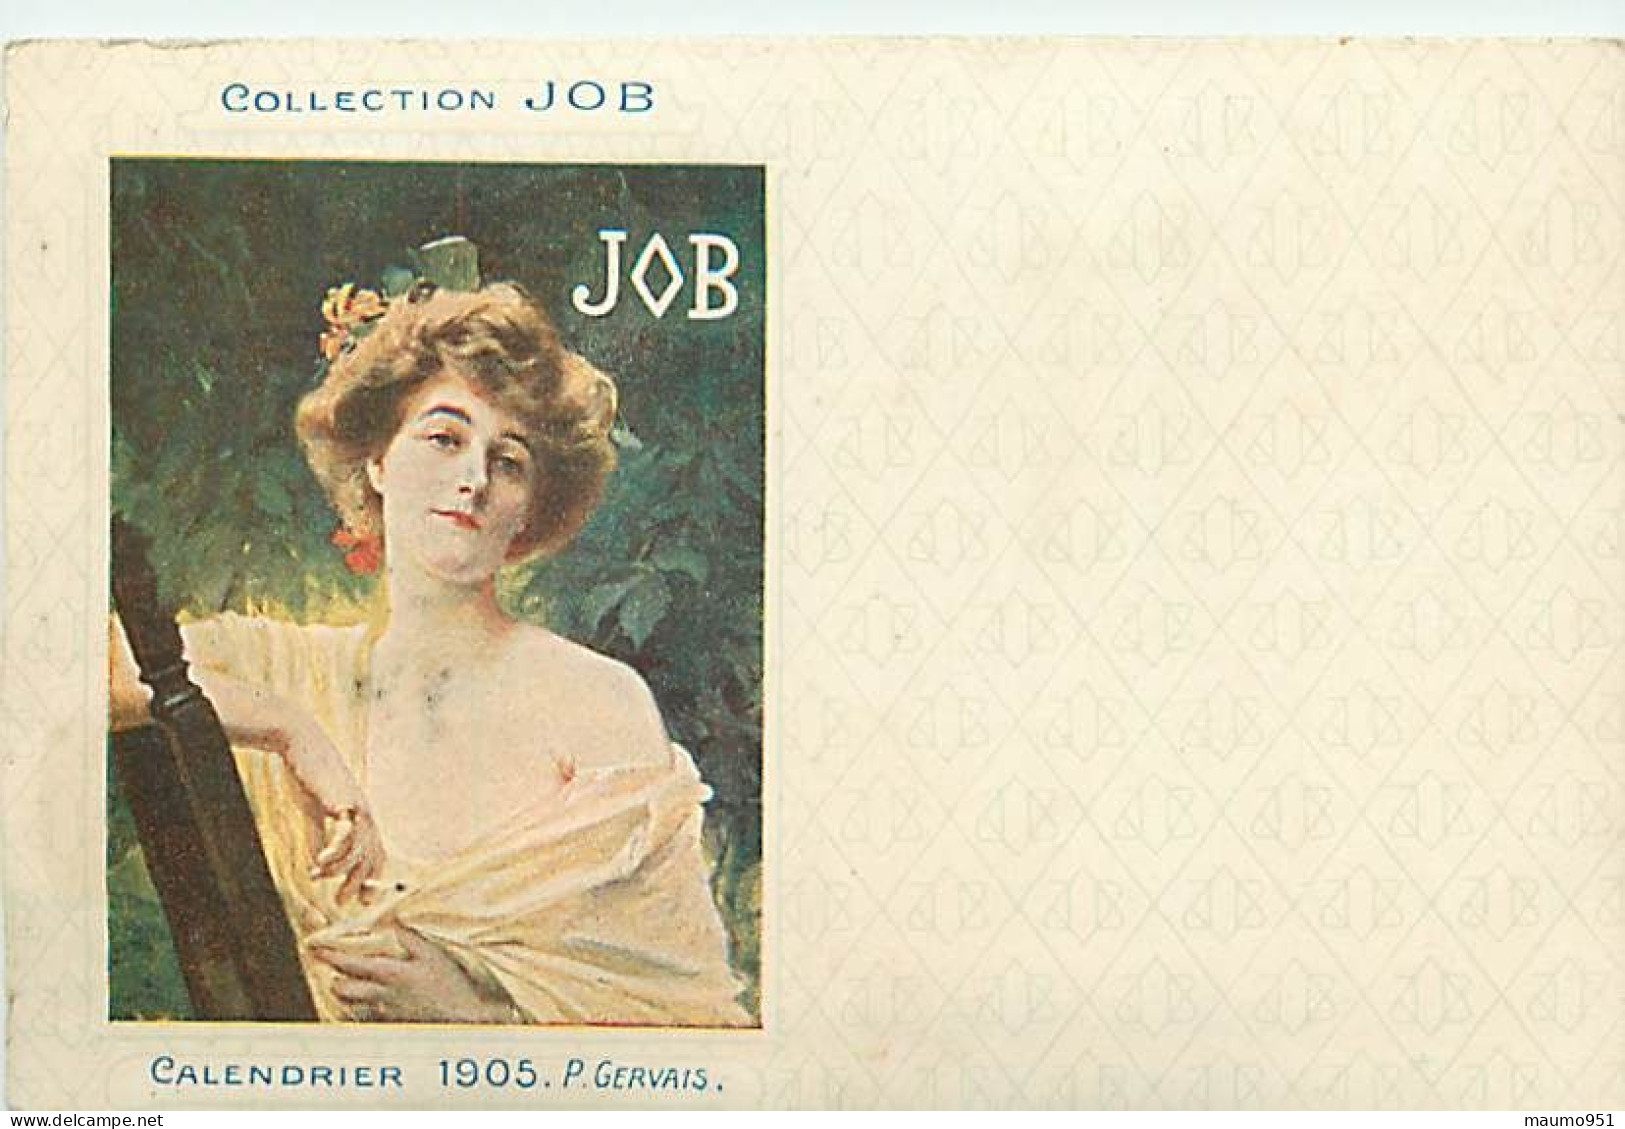 COLLECTION JOB - CALENDRIER 1905 P. GERVAIS - Avant 1900